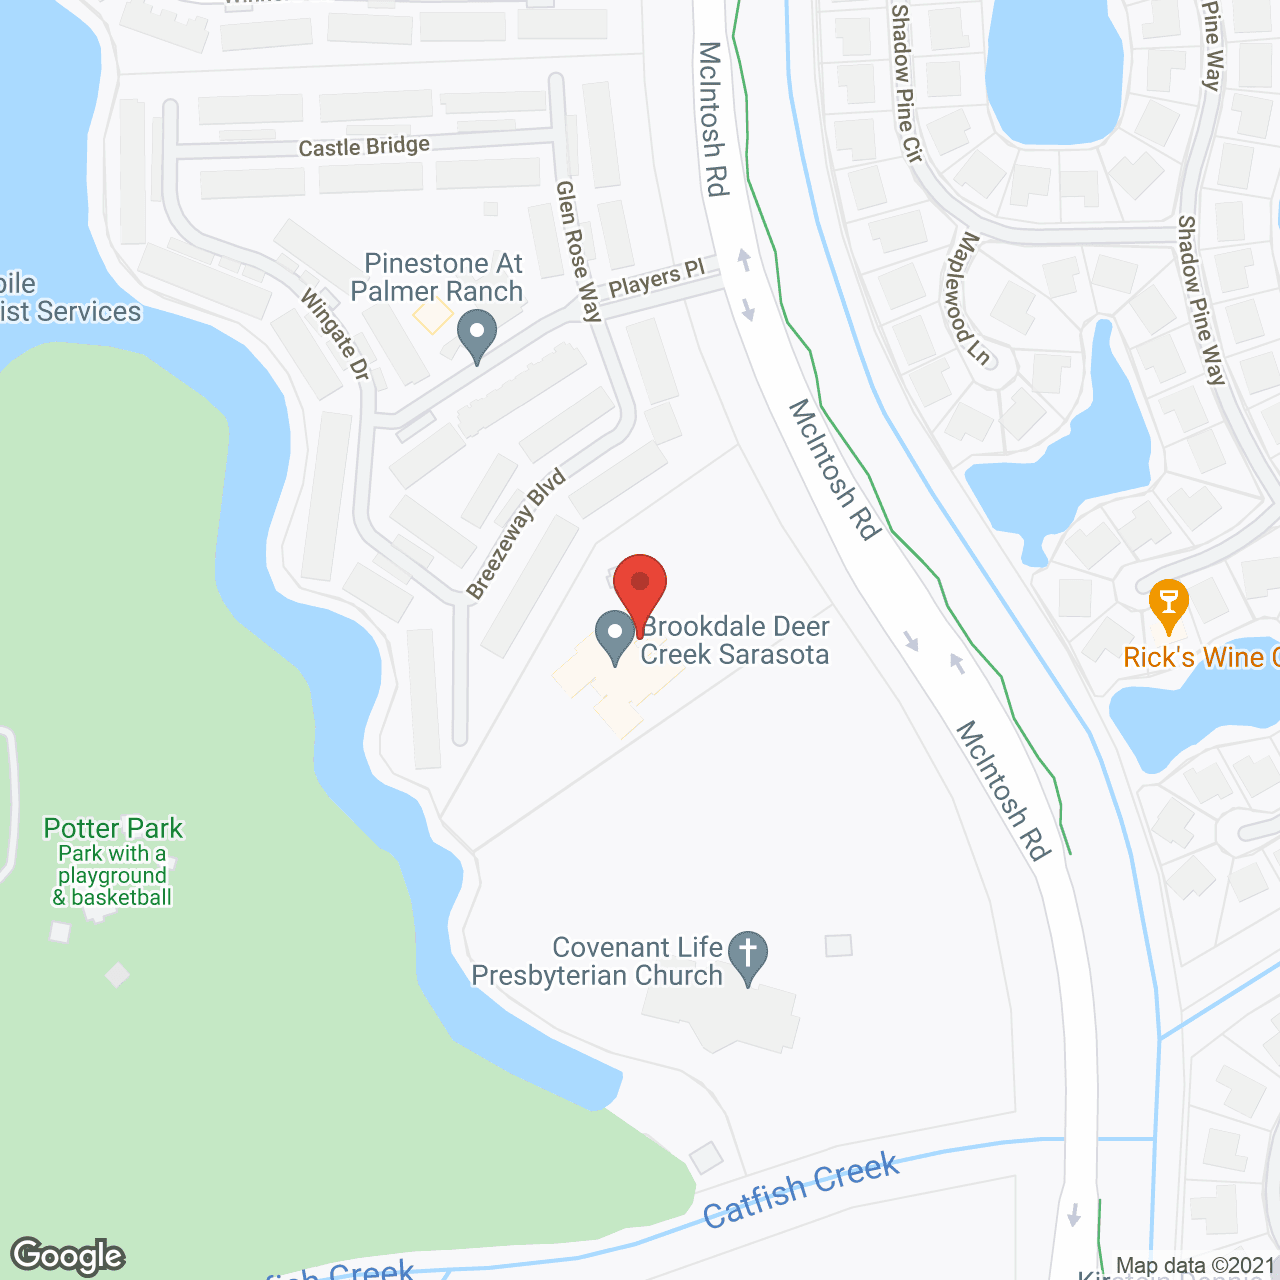 Brookdale Deer Creek Sarasota in google map